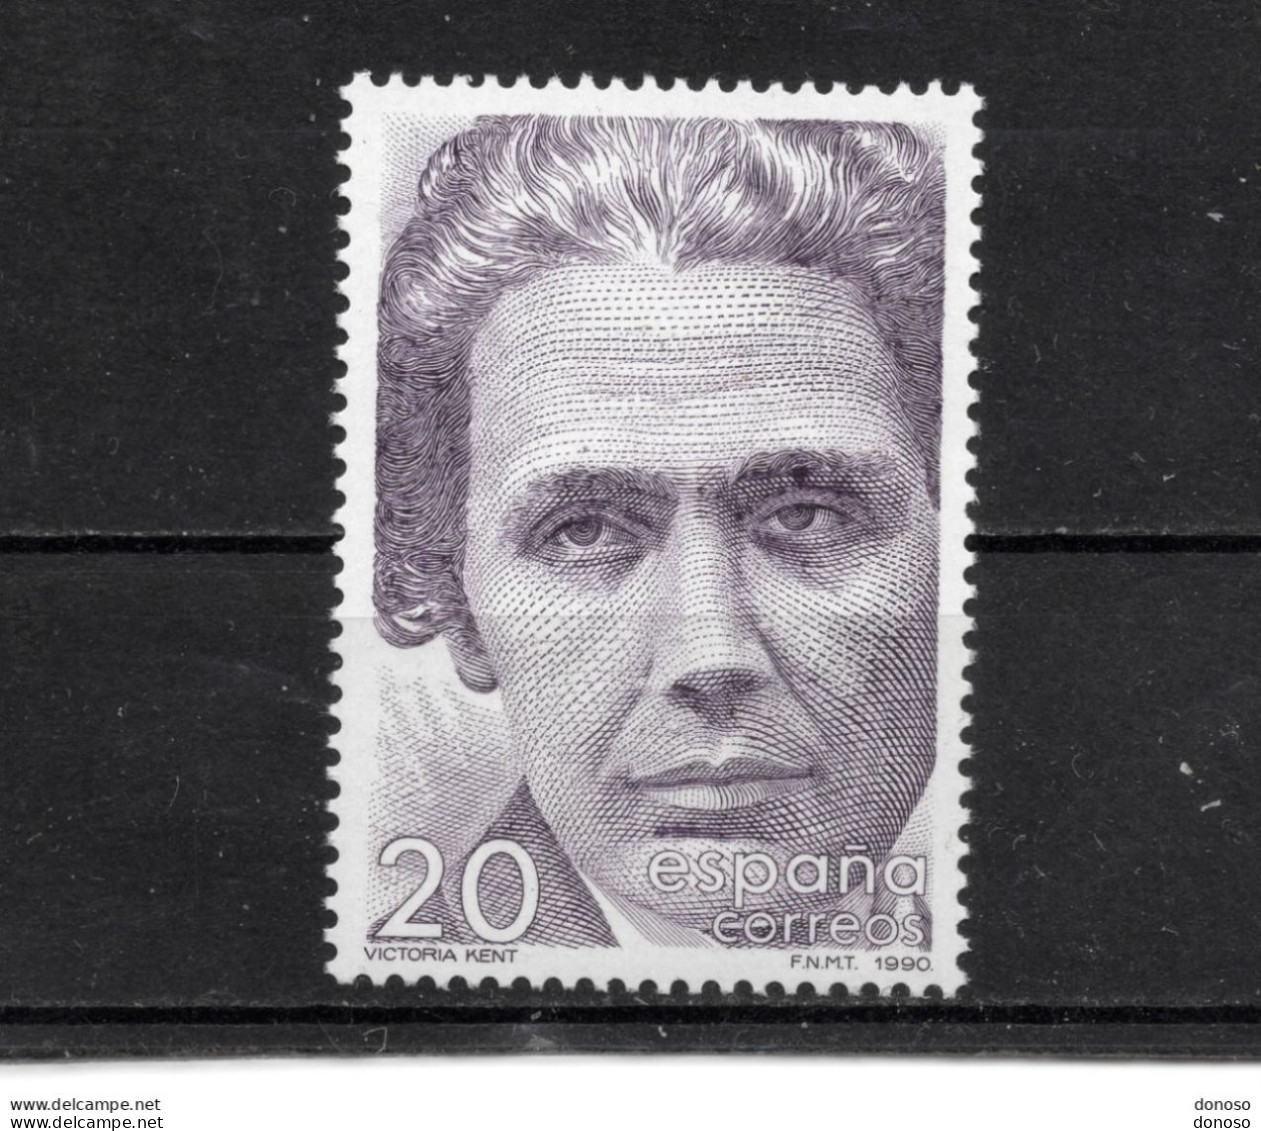 ESPAGNE 1990 VICTORIA KENT Yvert 2663 NEUF** MNH - Unused Stamps